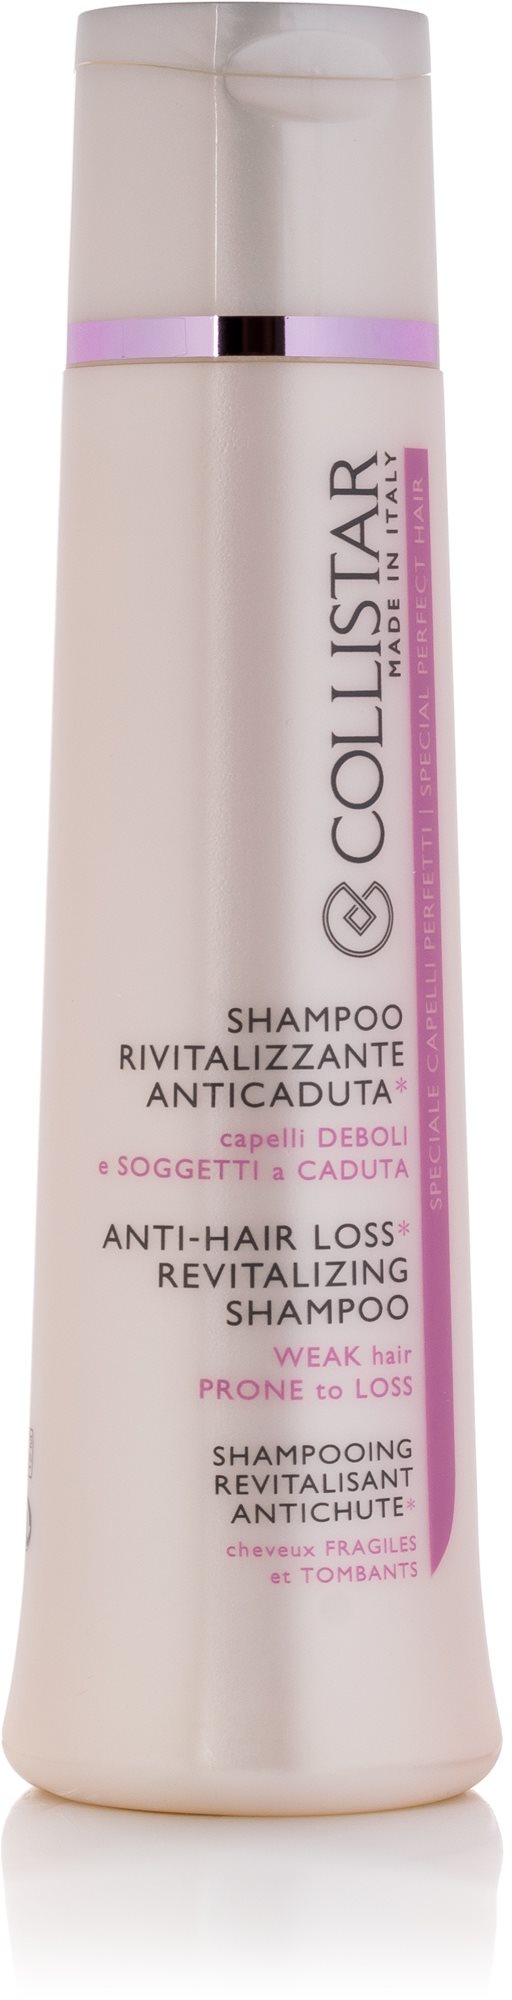 COLLISTAR Anti-Hair Loss Revitalizing Shampoo 250 ml